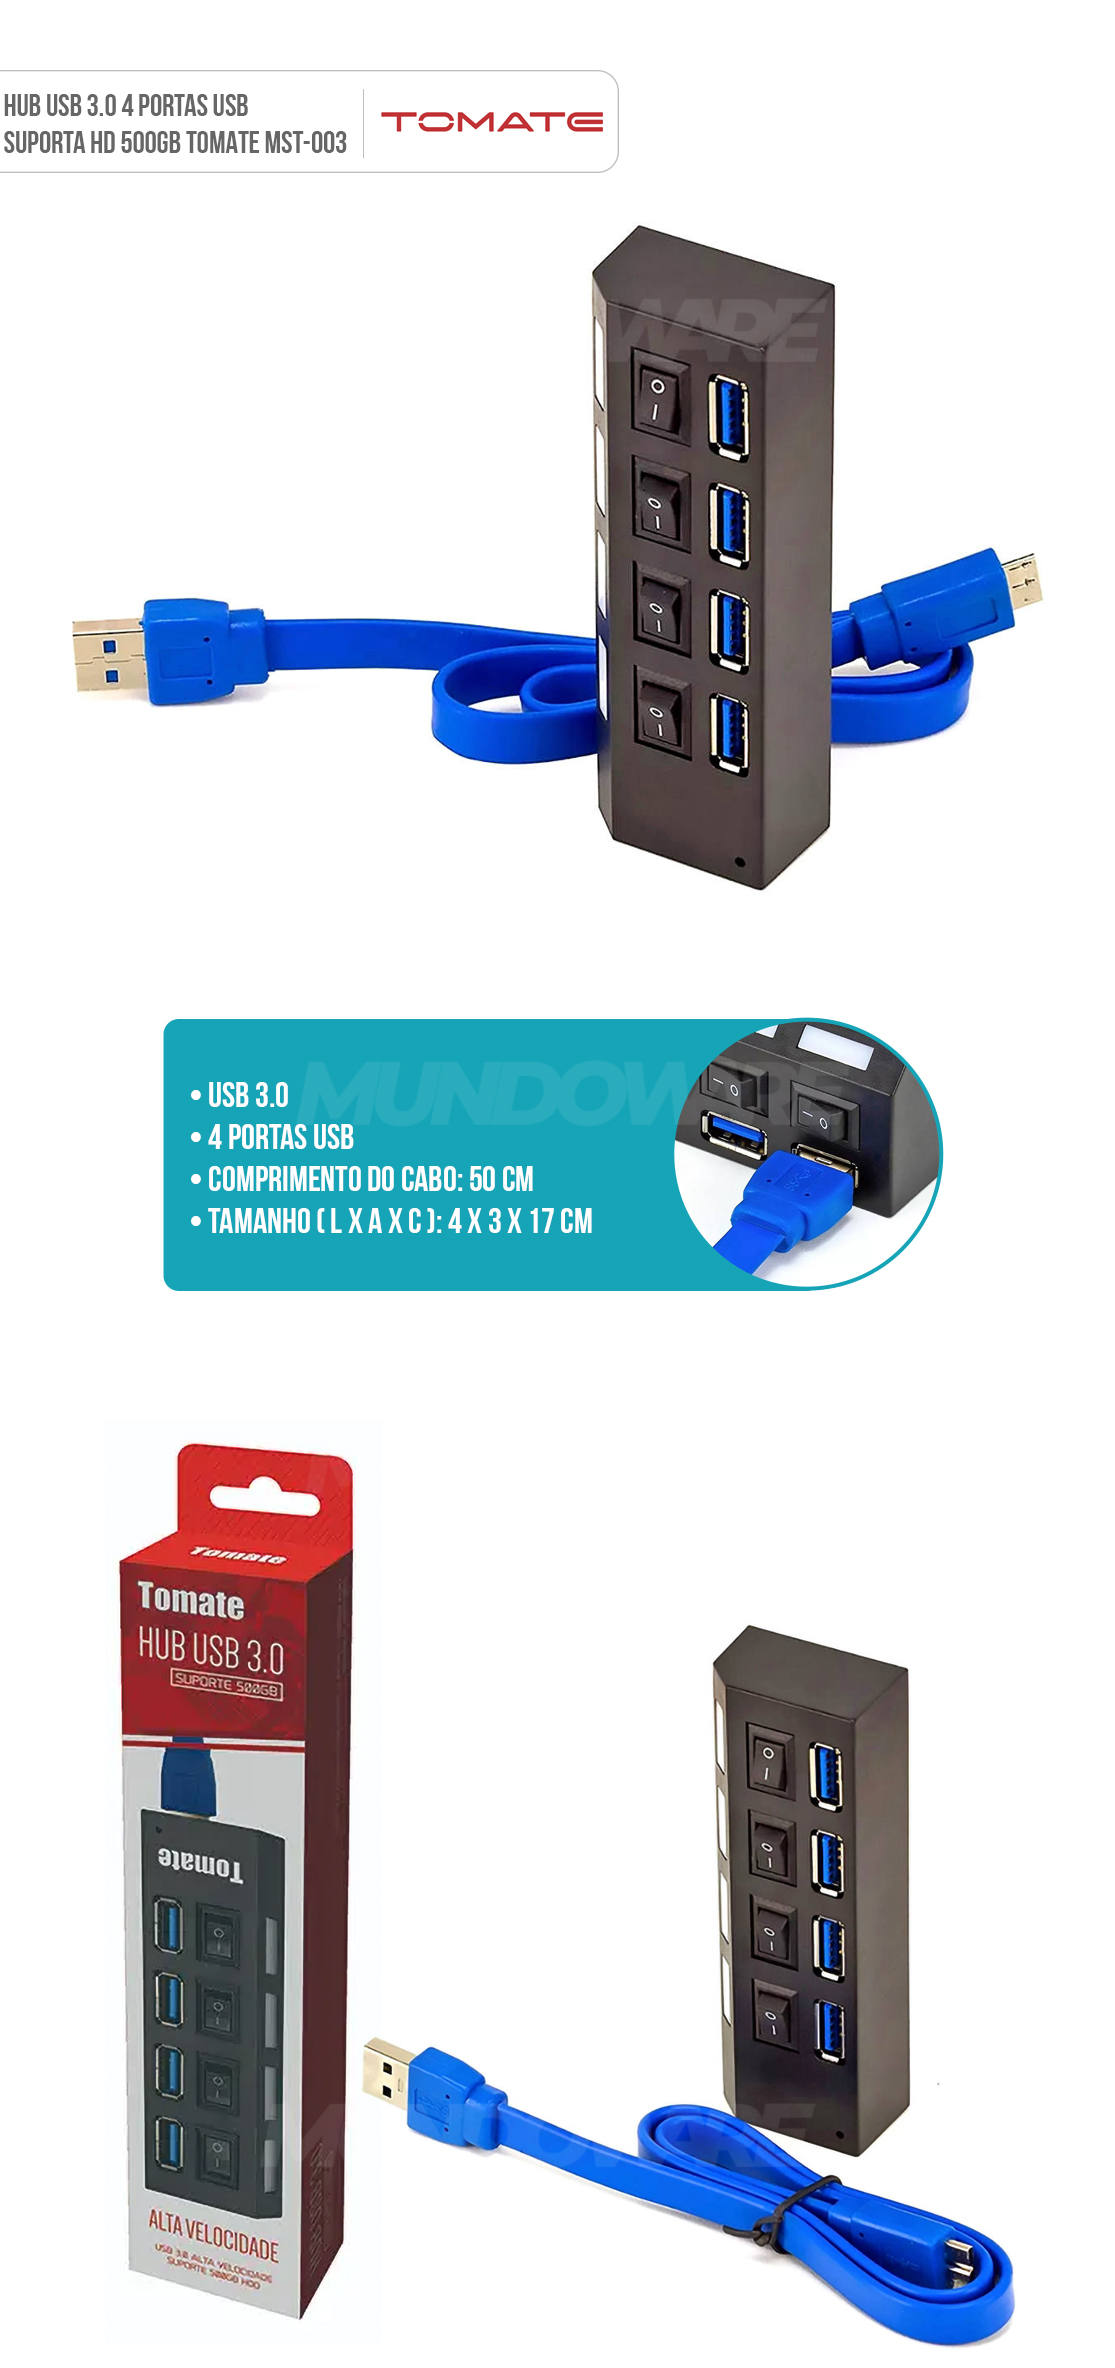 Hub USB 3.0 4 portas USB com Led Indicador e Botão On/Off Individuais Suporta HD 500GB Tomate MST-003